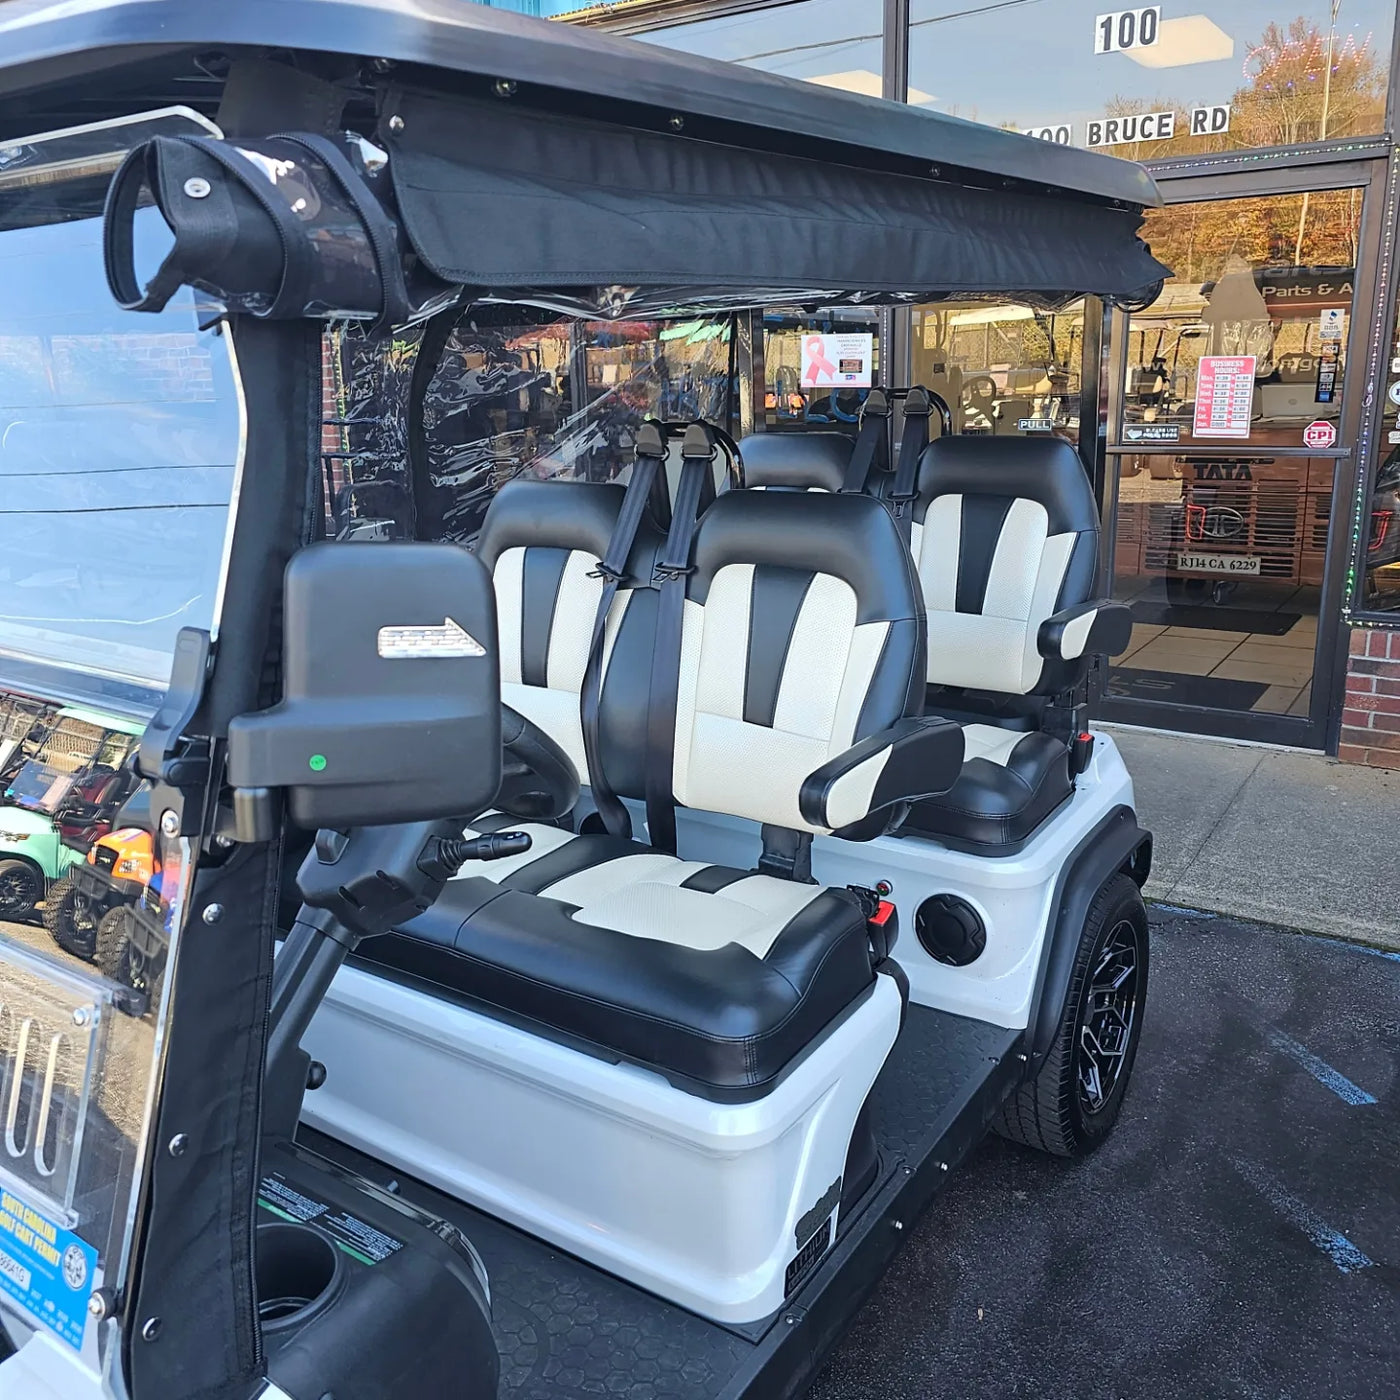 Evolution D5 Ranger & Maverick 4 Passenger DoorWorks Golf Cart Enclosure